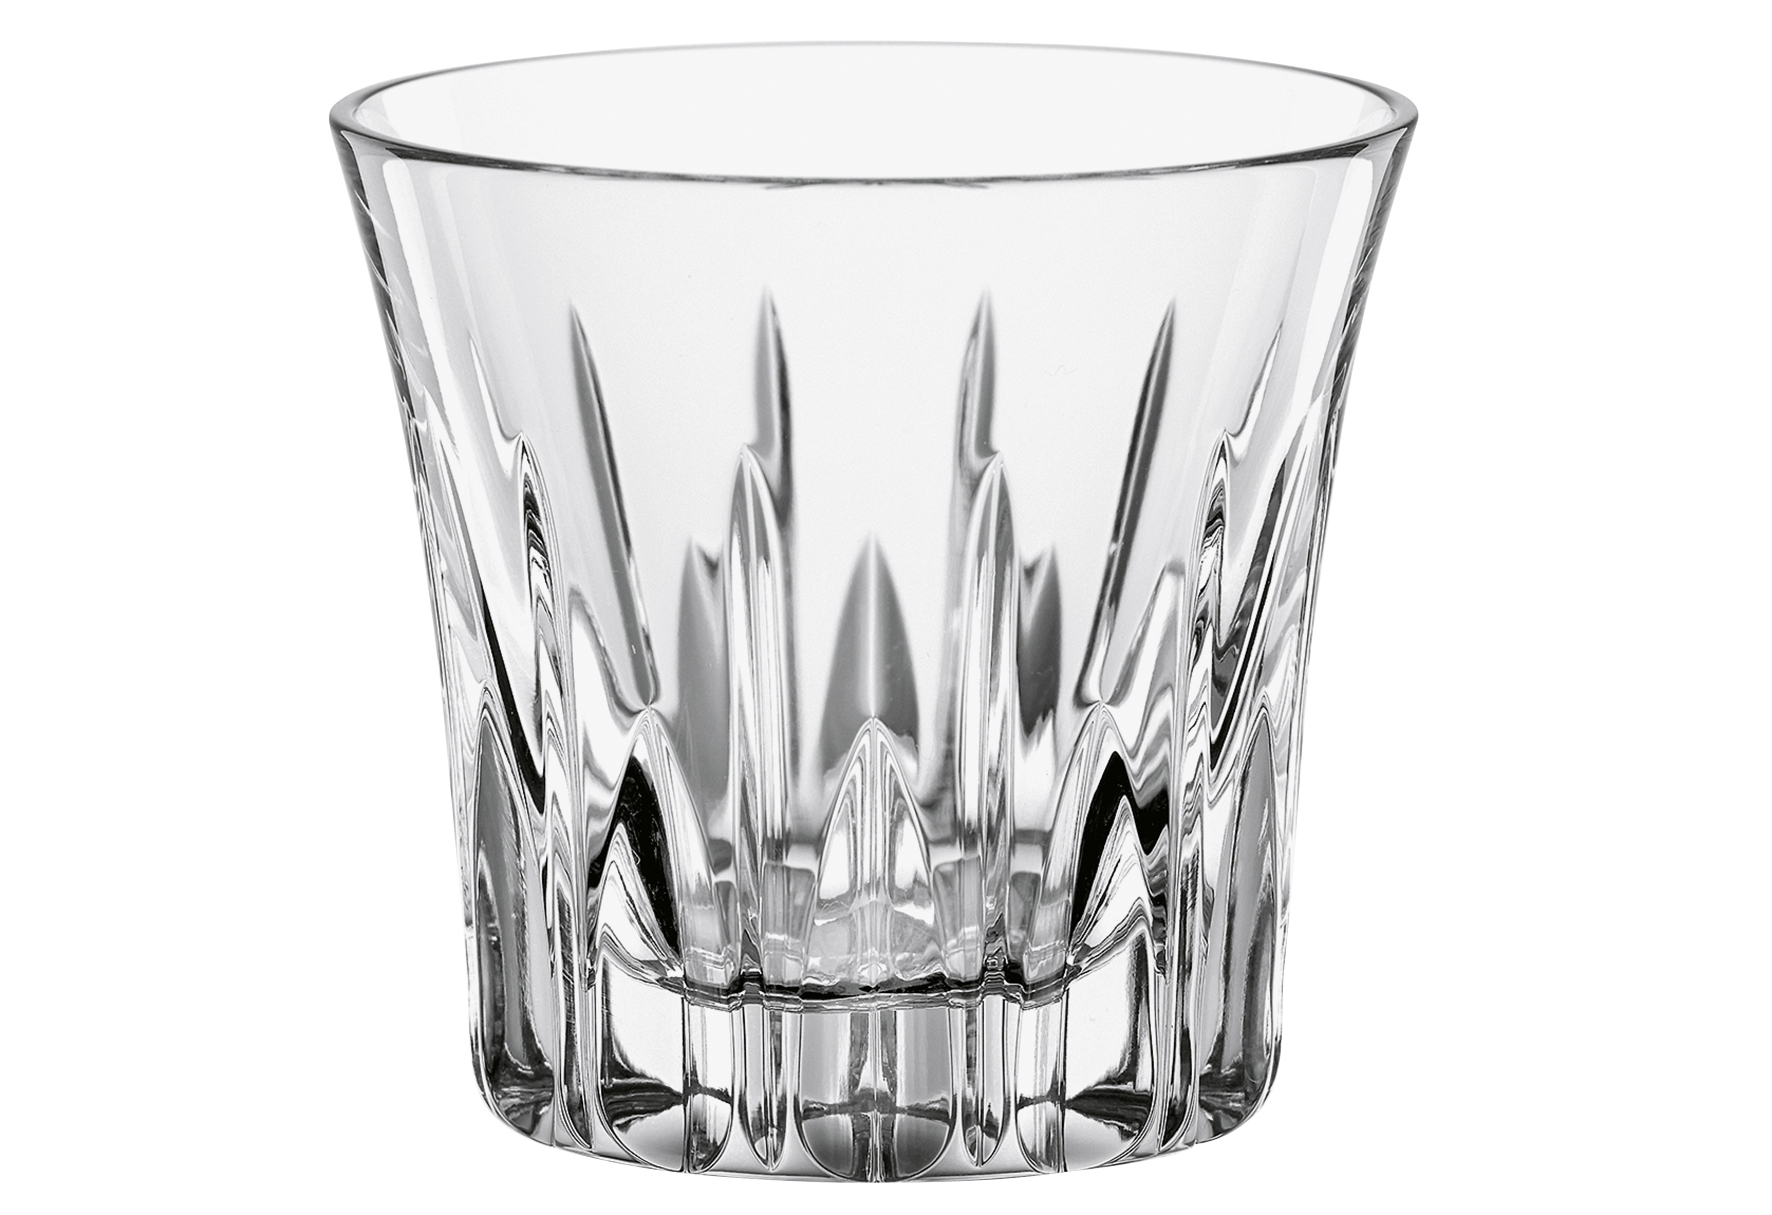 NACHTMANN Whiskyglas Classix SOF 247ml 4er Set